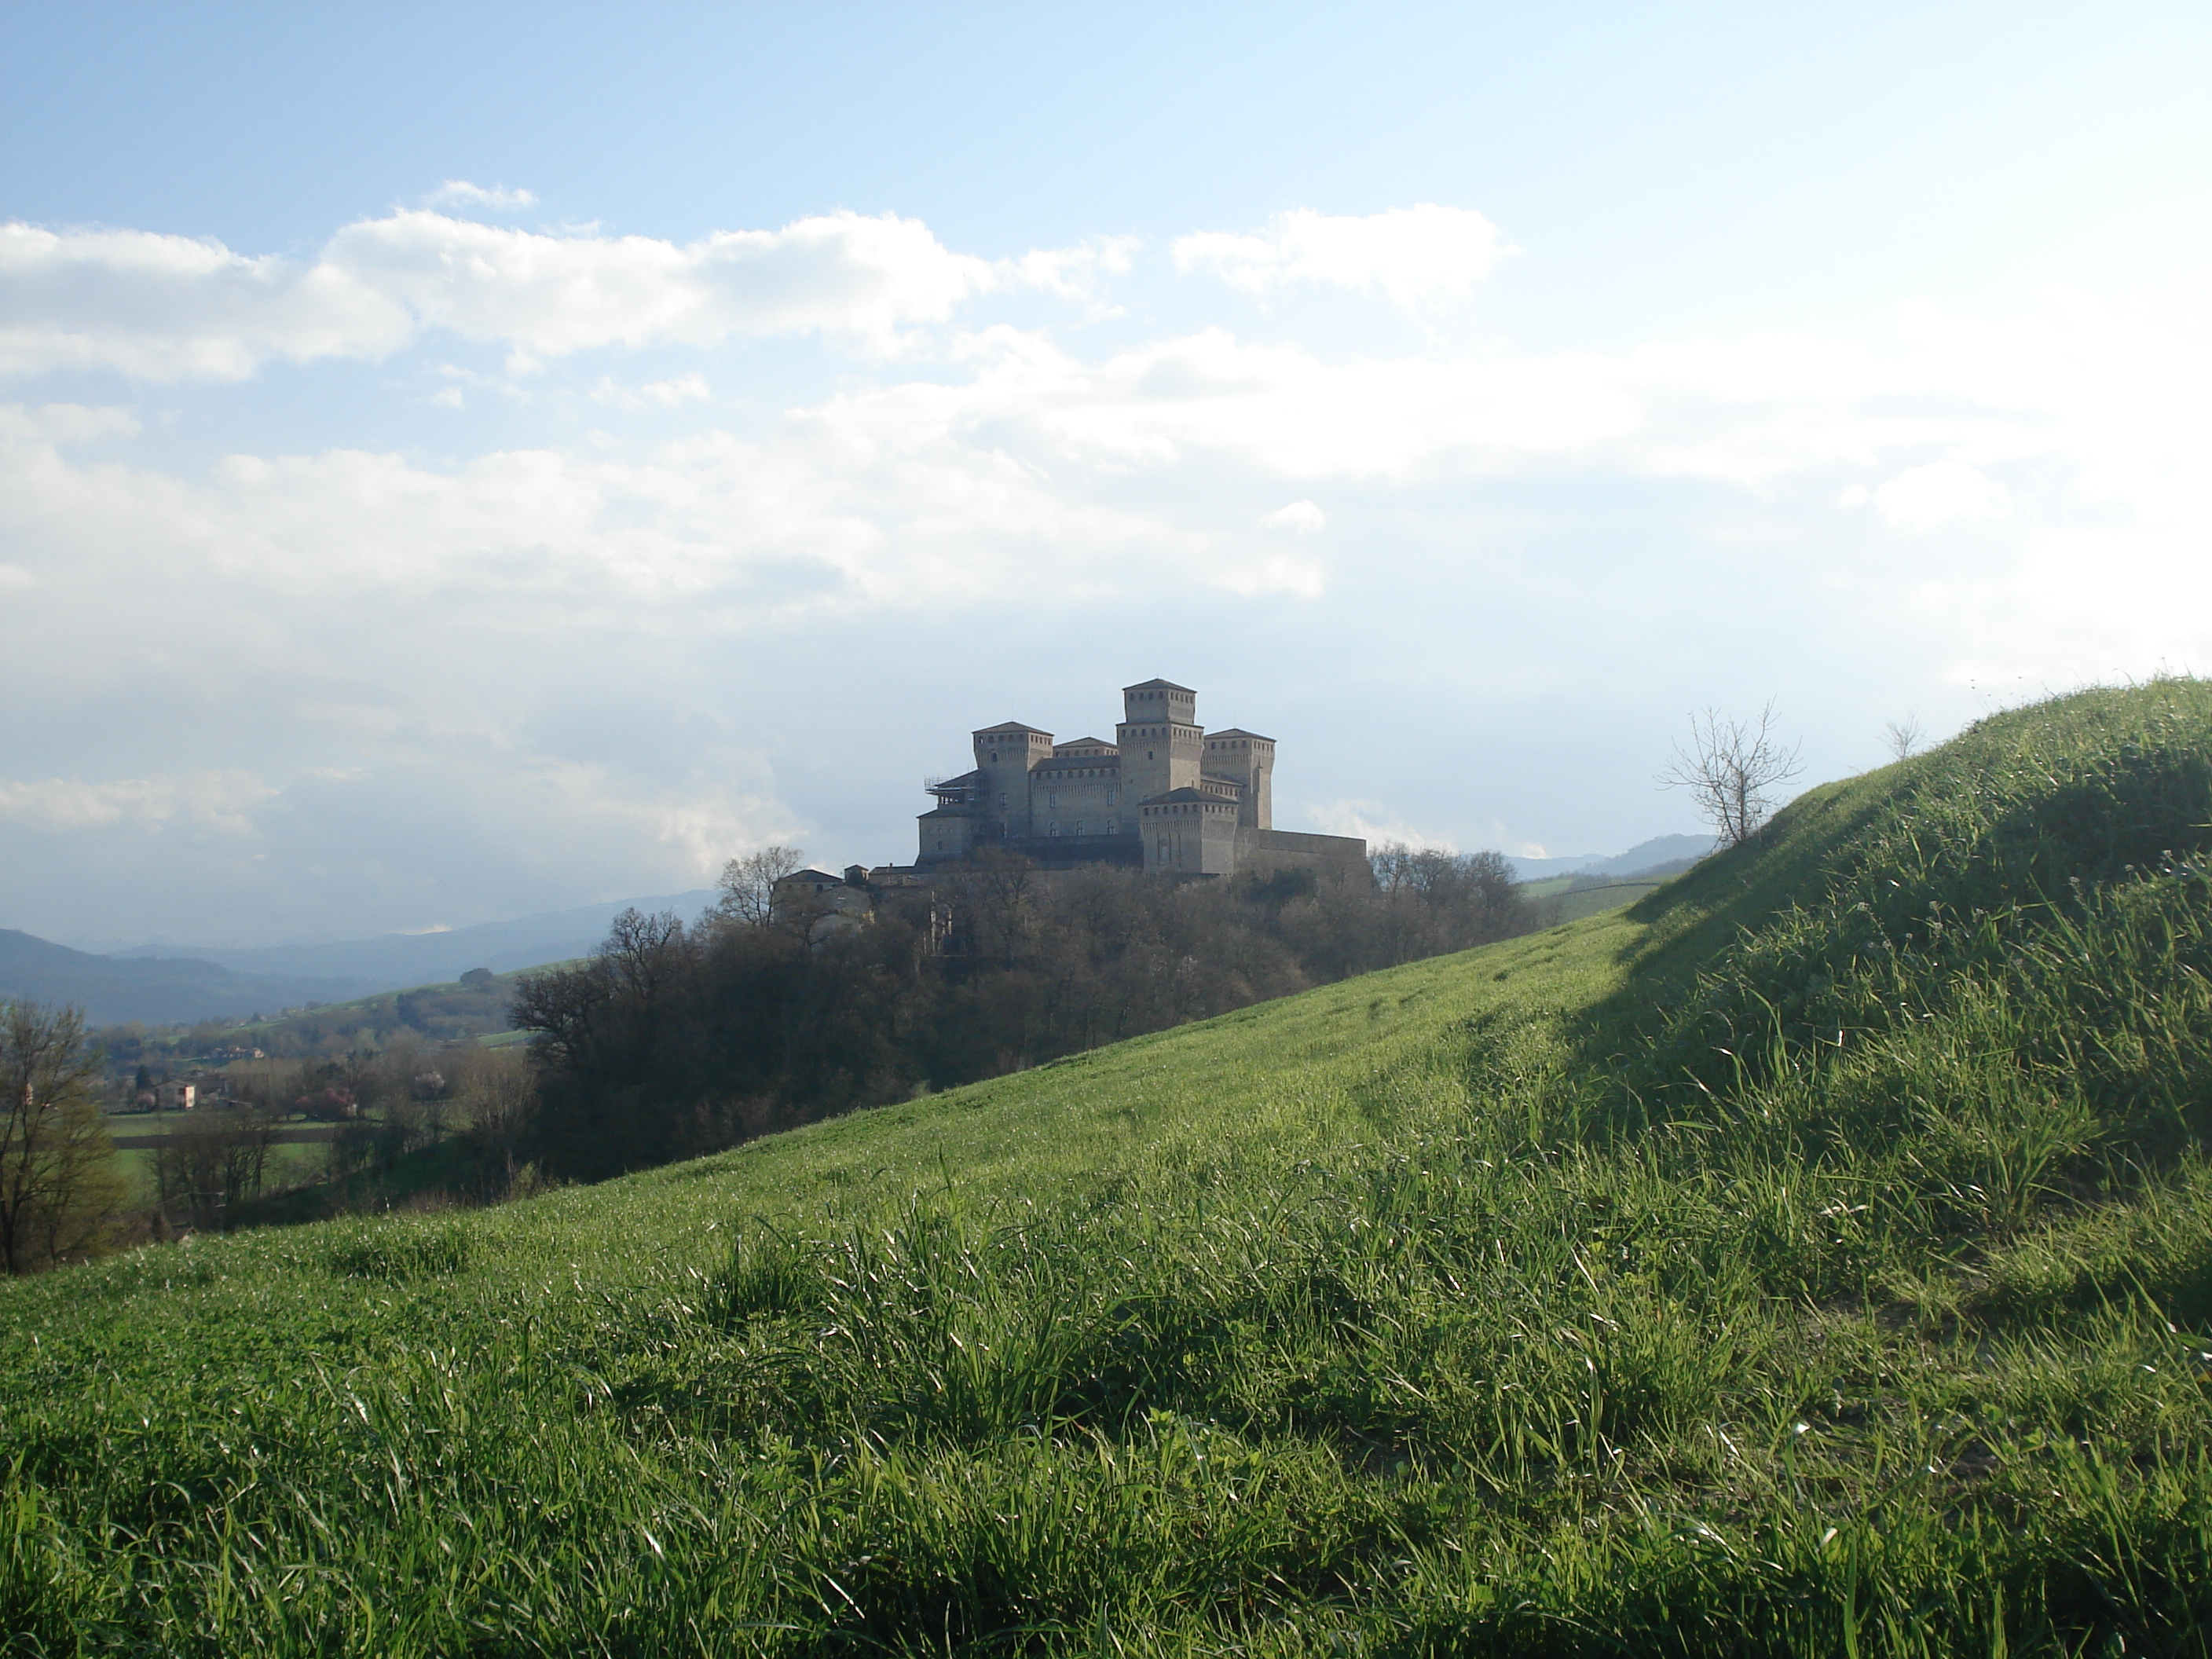 foto: https://upload.wikimedia.org/wikipedia/commons/c/c2/Castello_di_Torrechiara_07.JPG